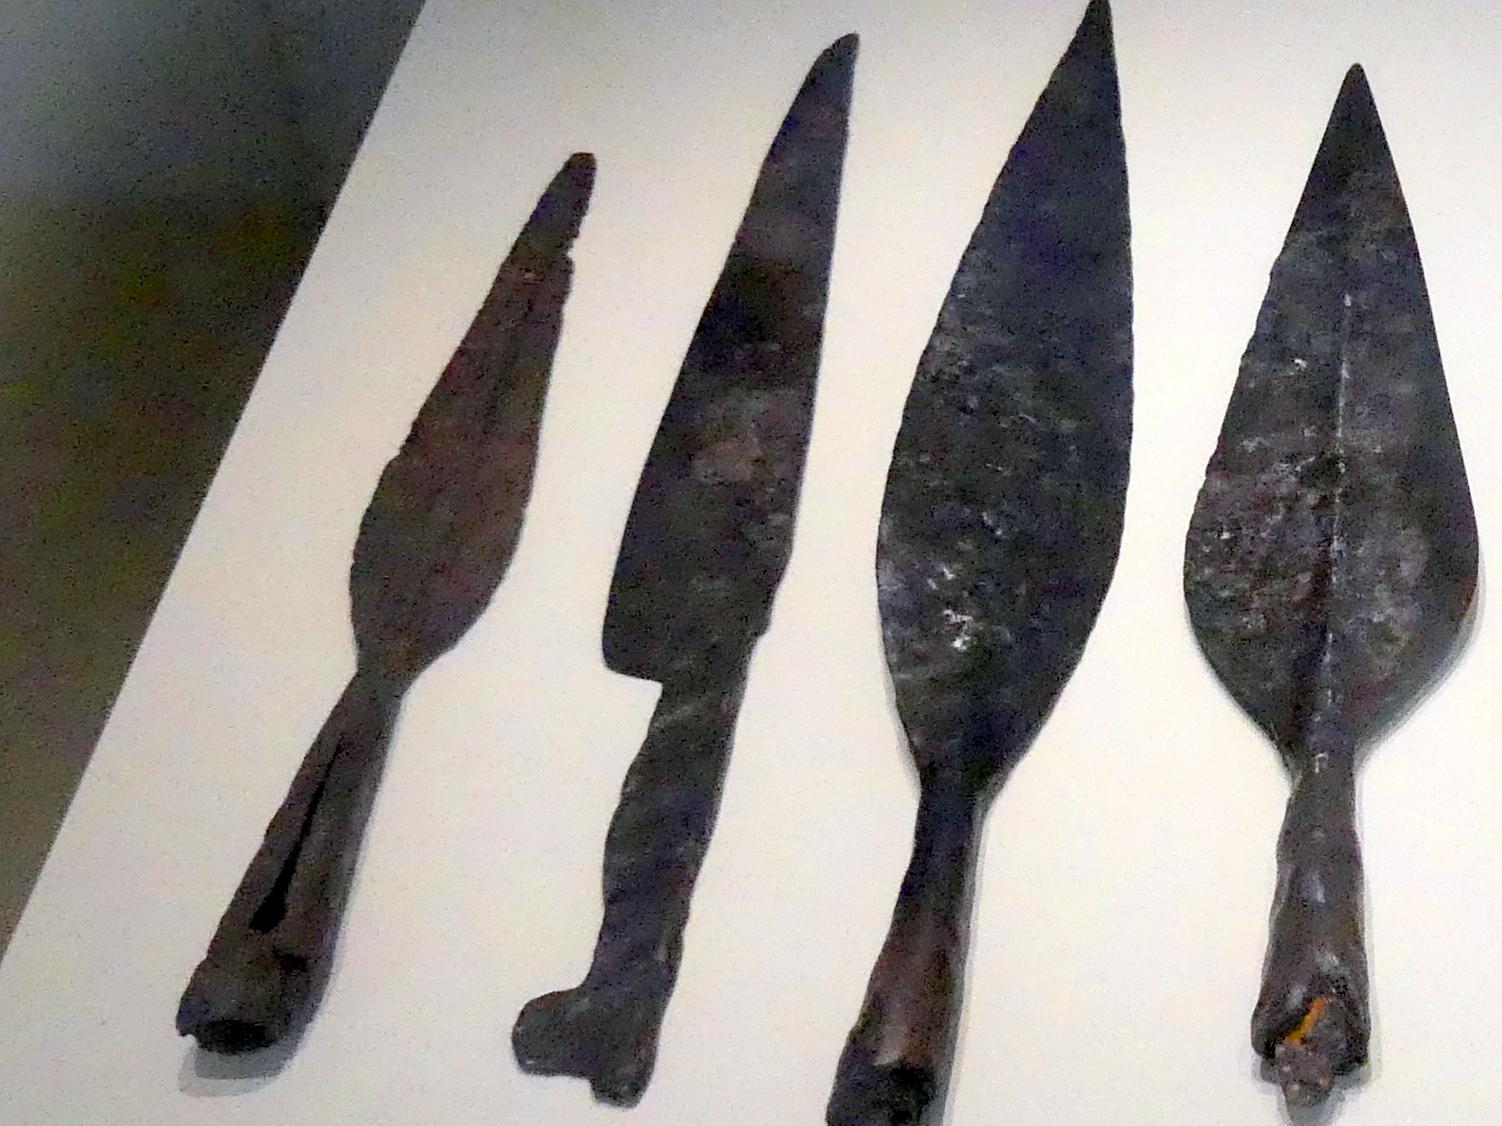 Messer, Hallstattzeit, 700 - 200 v. Chr.